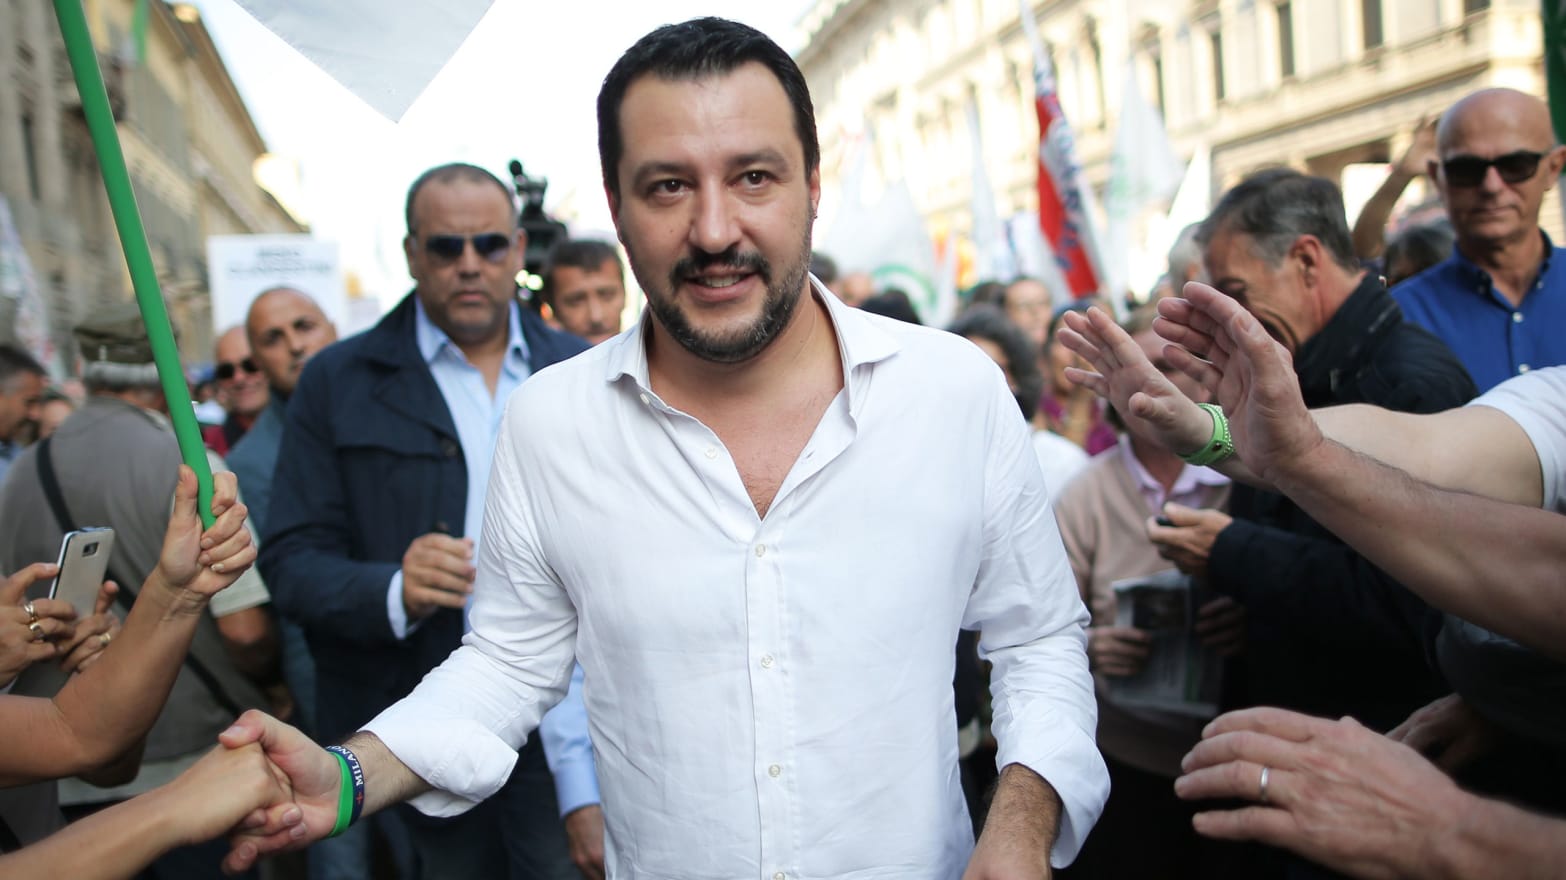 Italy's Matteo Salvini Is Donald Trump's Loudest Foreign Surrogate